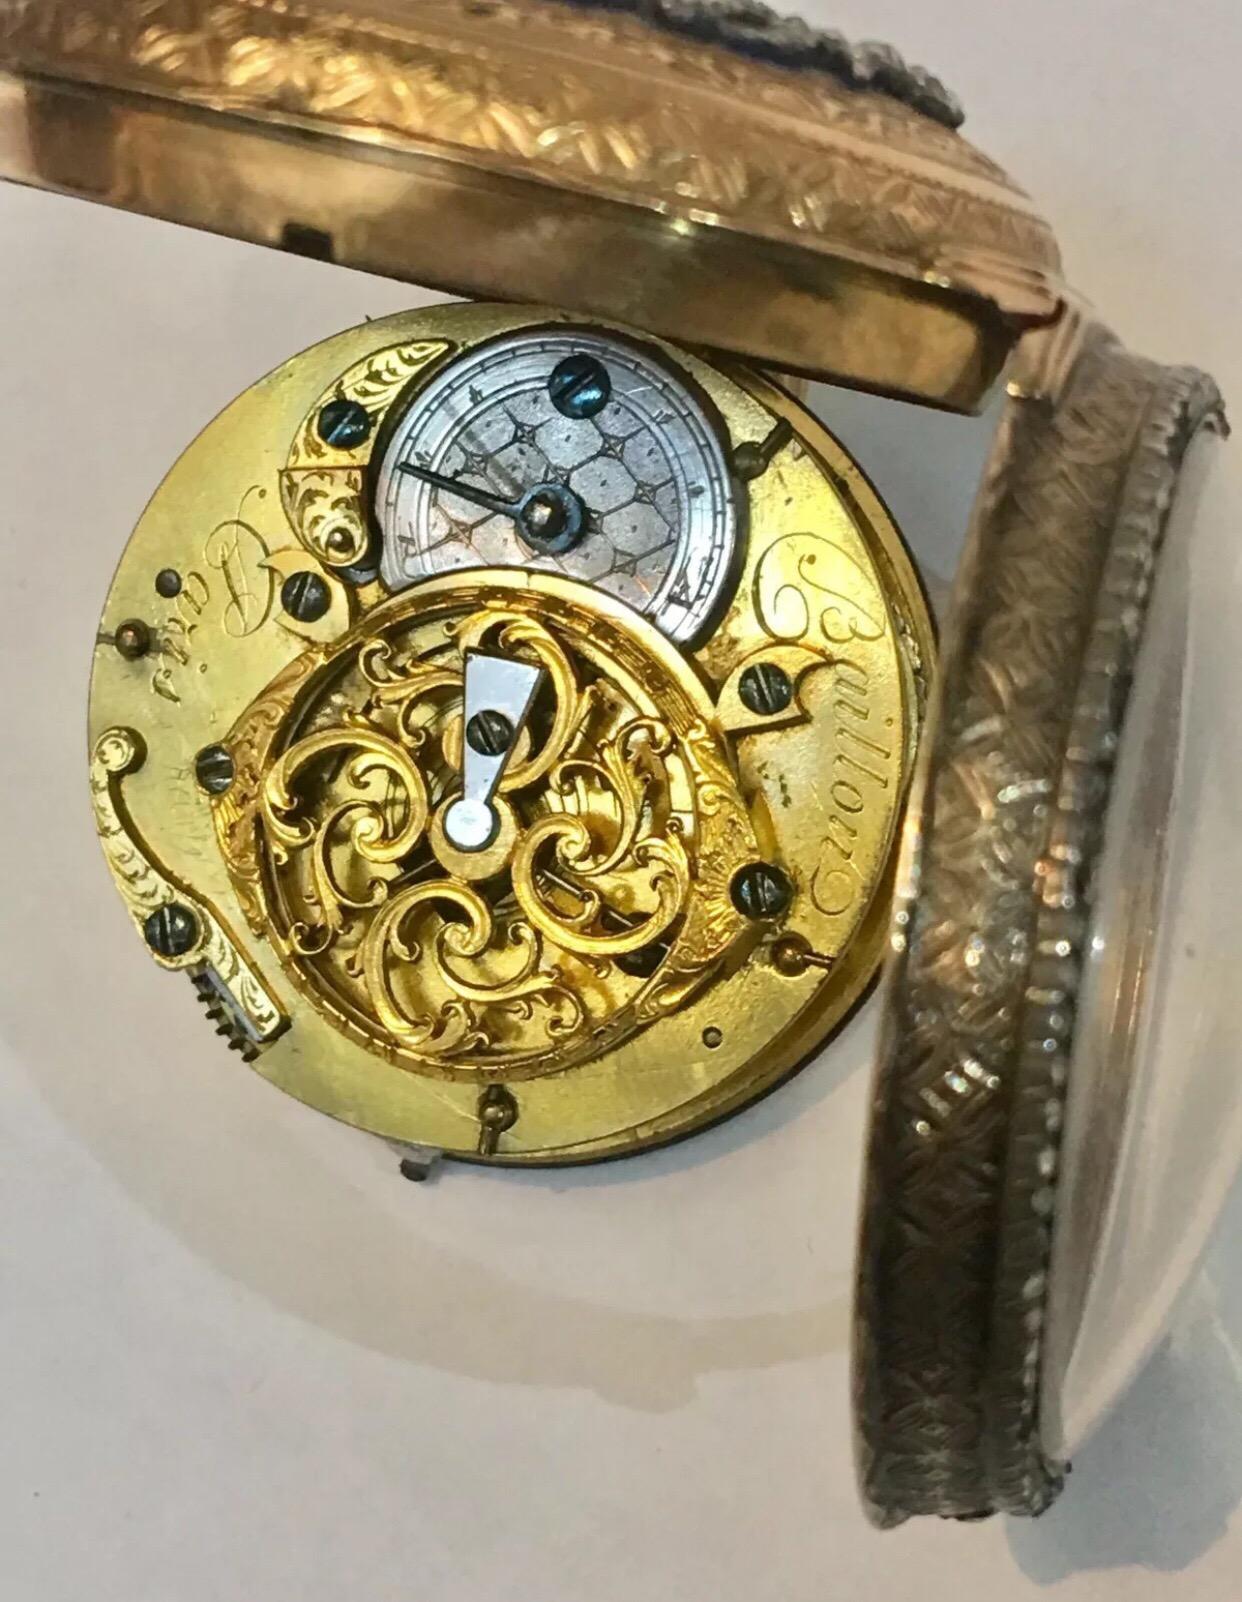 Bead Very Fine 18 Karat Gold Diamond, Enamel Verge Pocket Watch